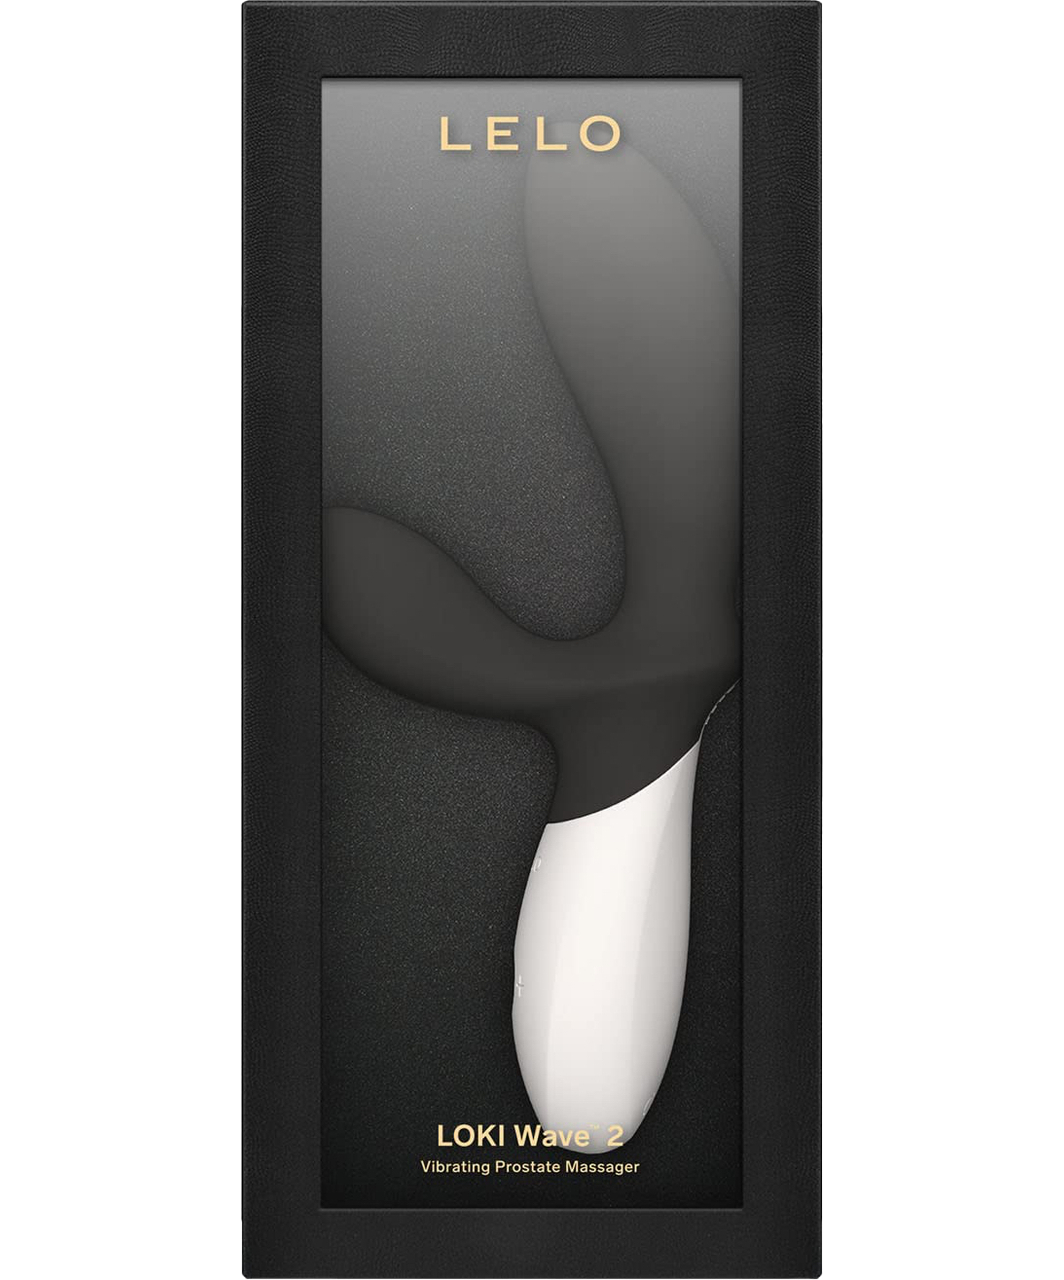 LELO Loki Wave 2 prostatas stimulators